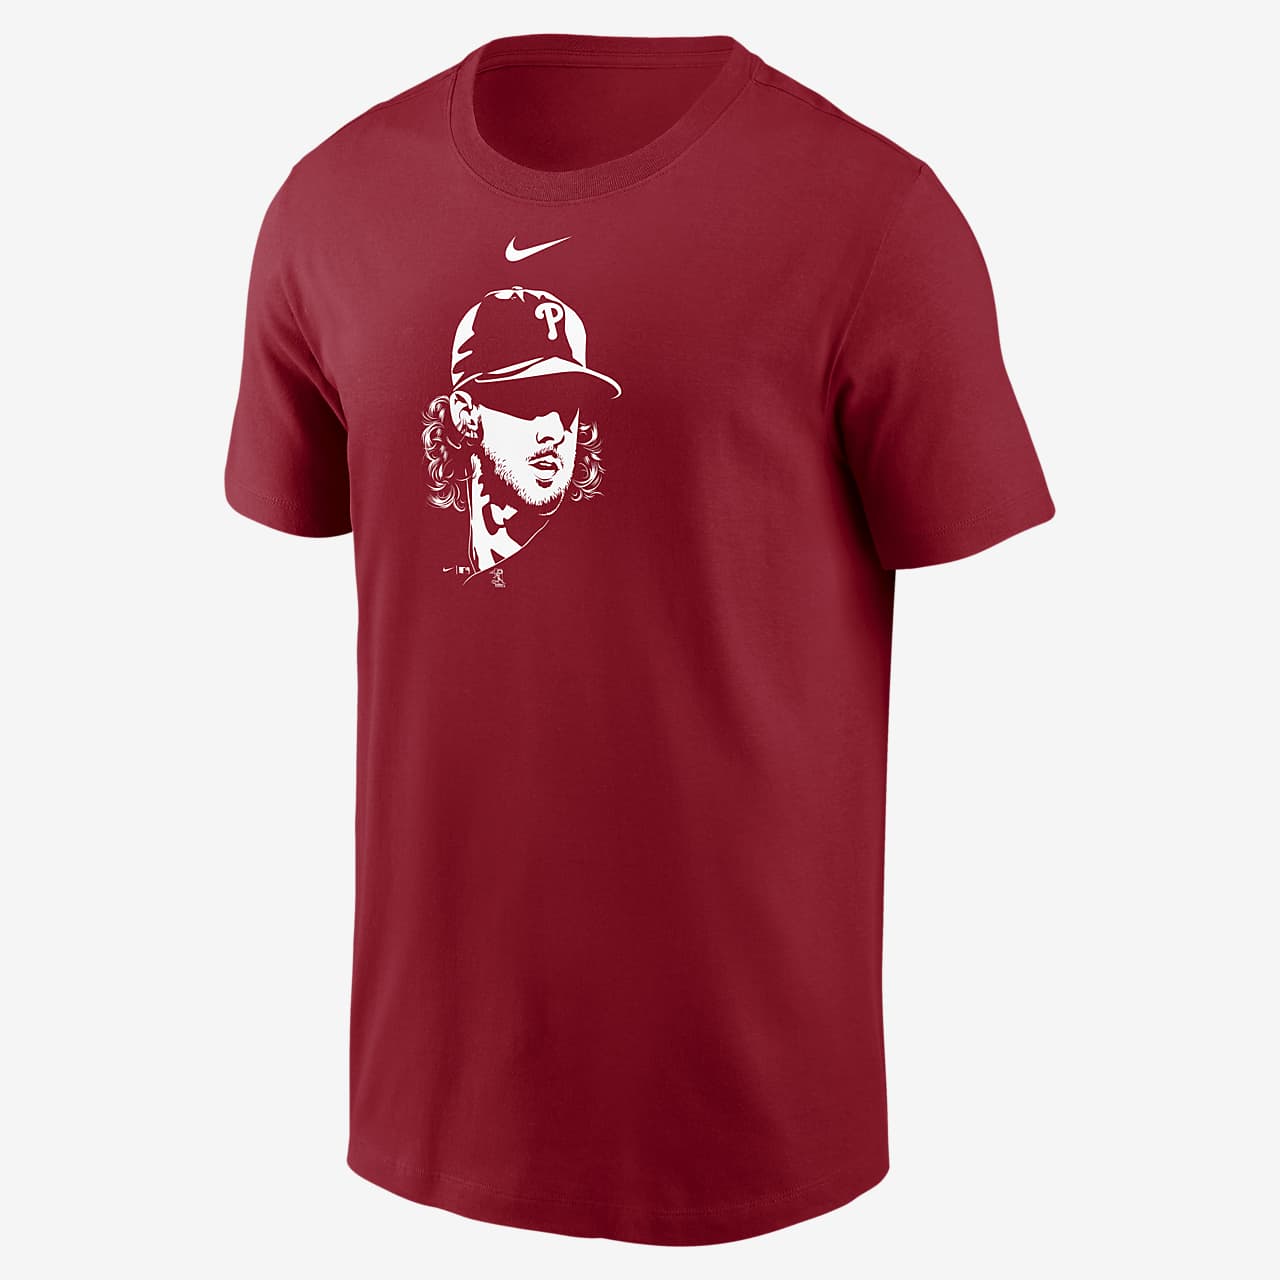 Download MLB Philadelphia Phillies (Aaron Nola) Men's T-Shirt. Nike.com